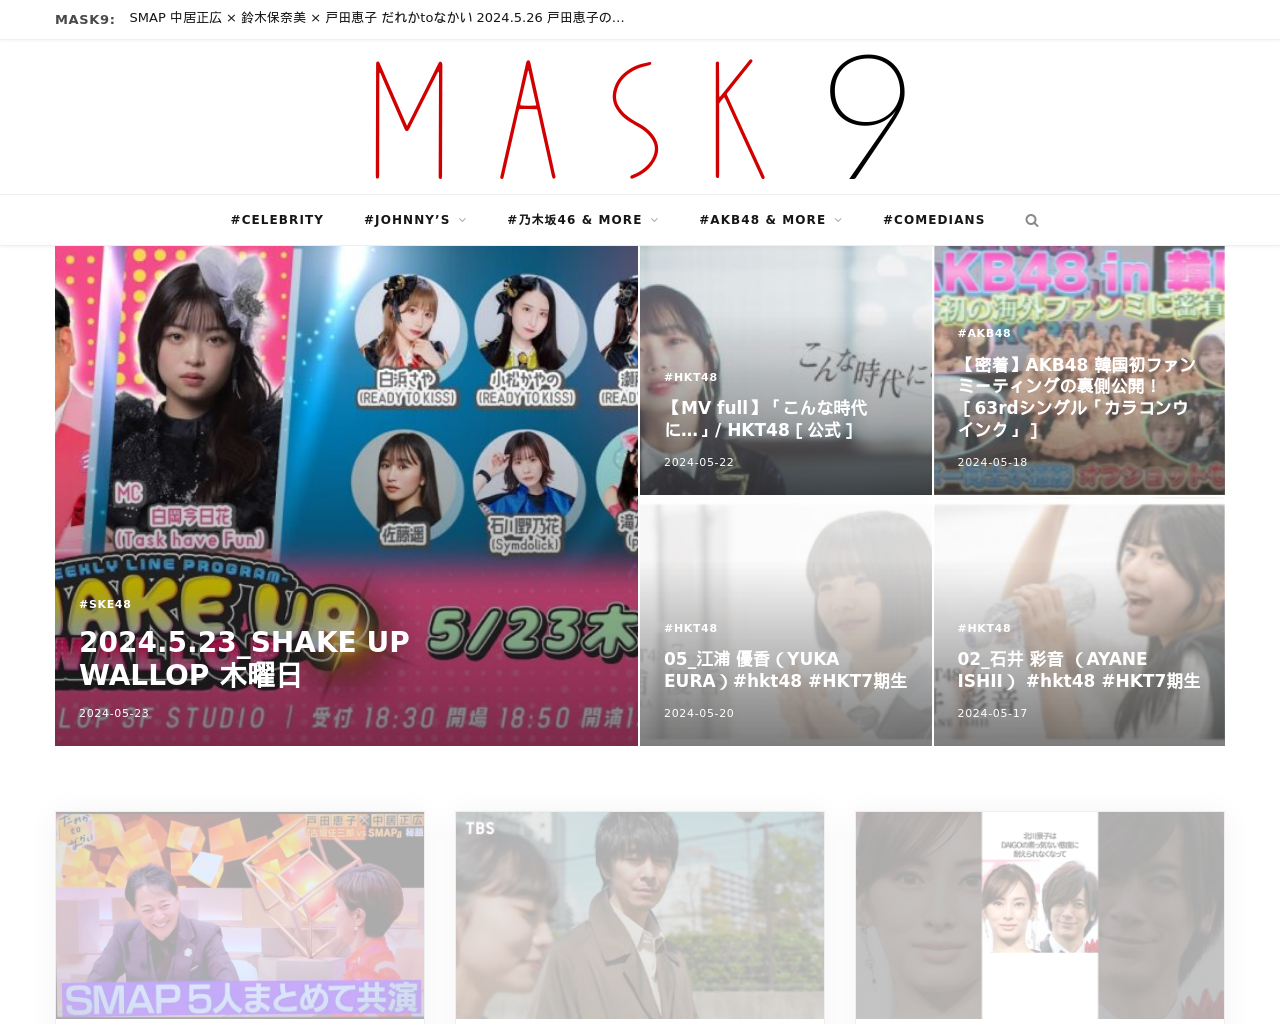 mask9.com